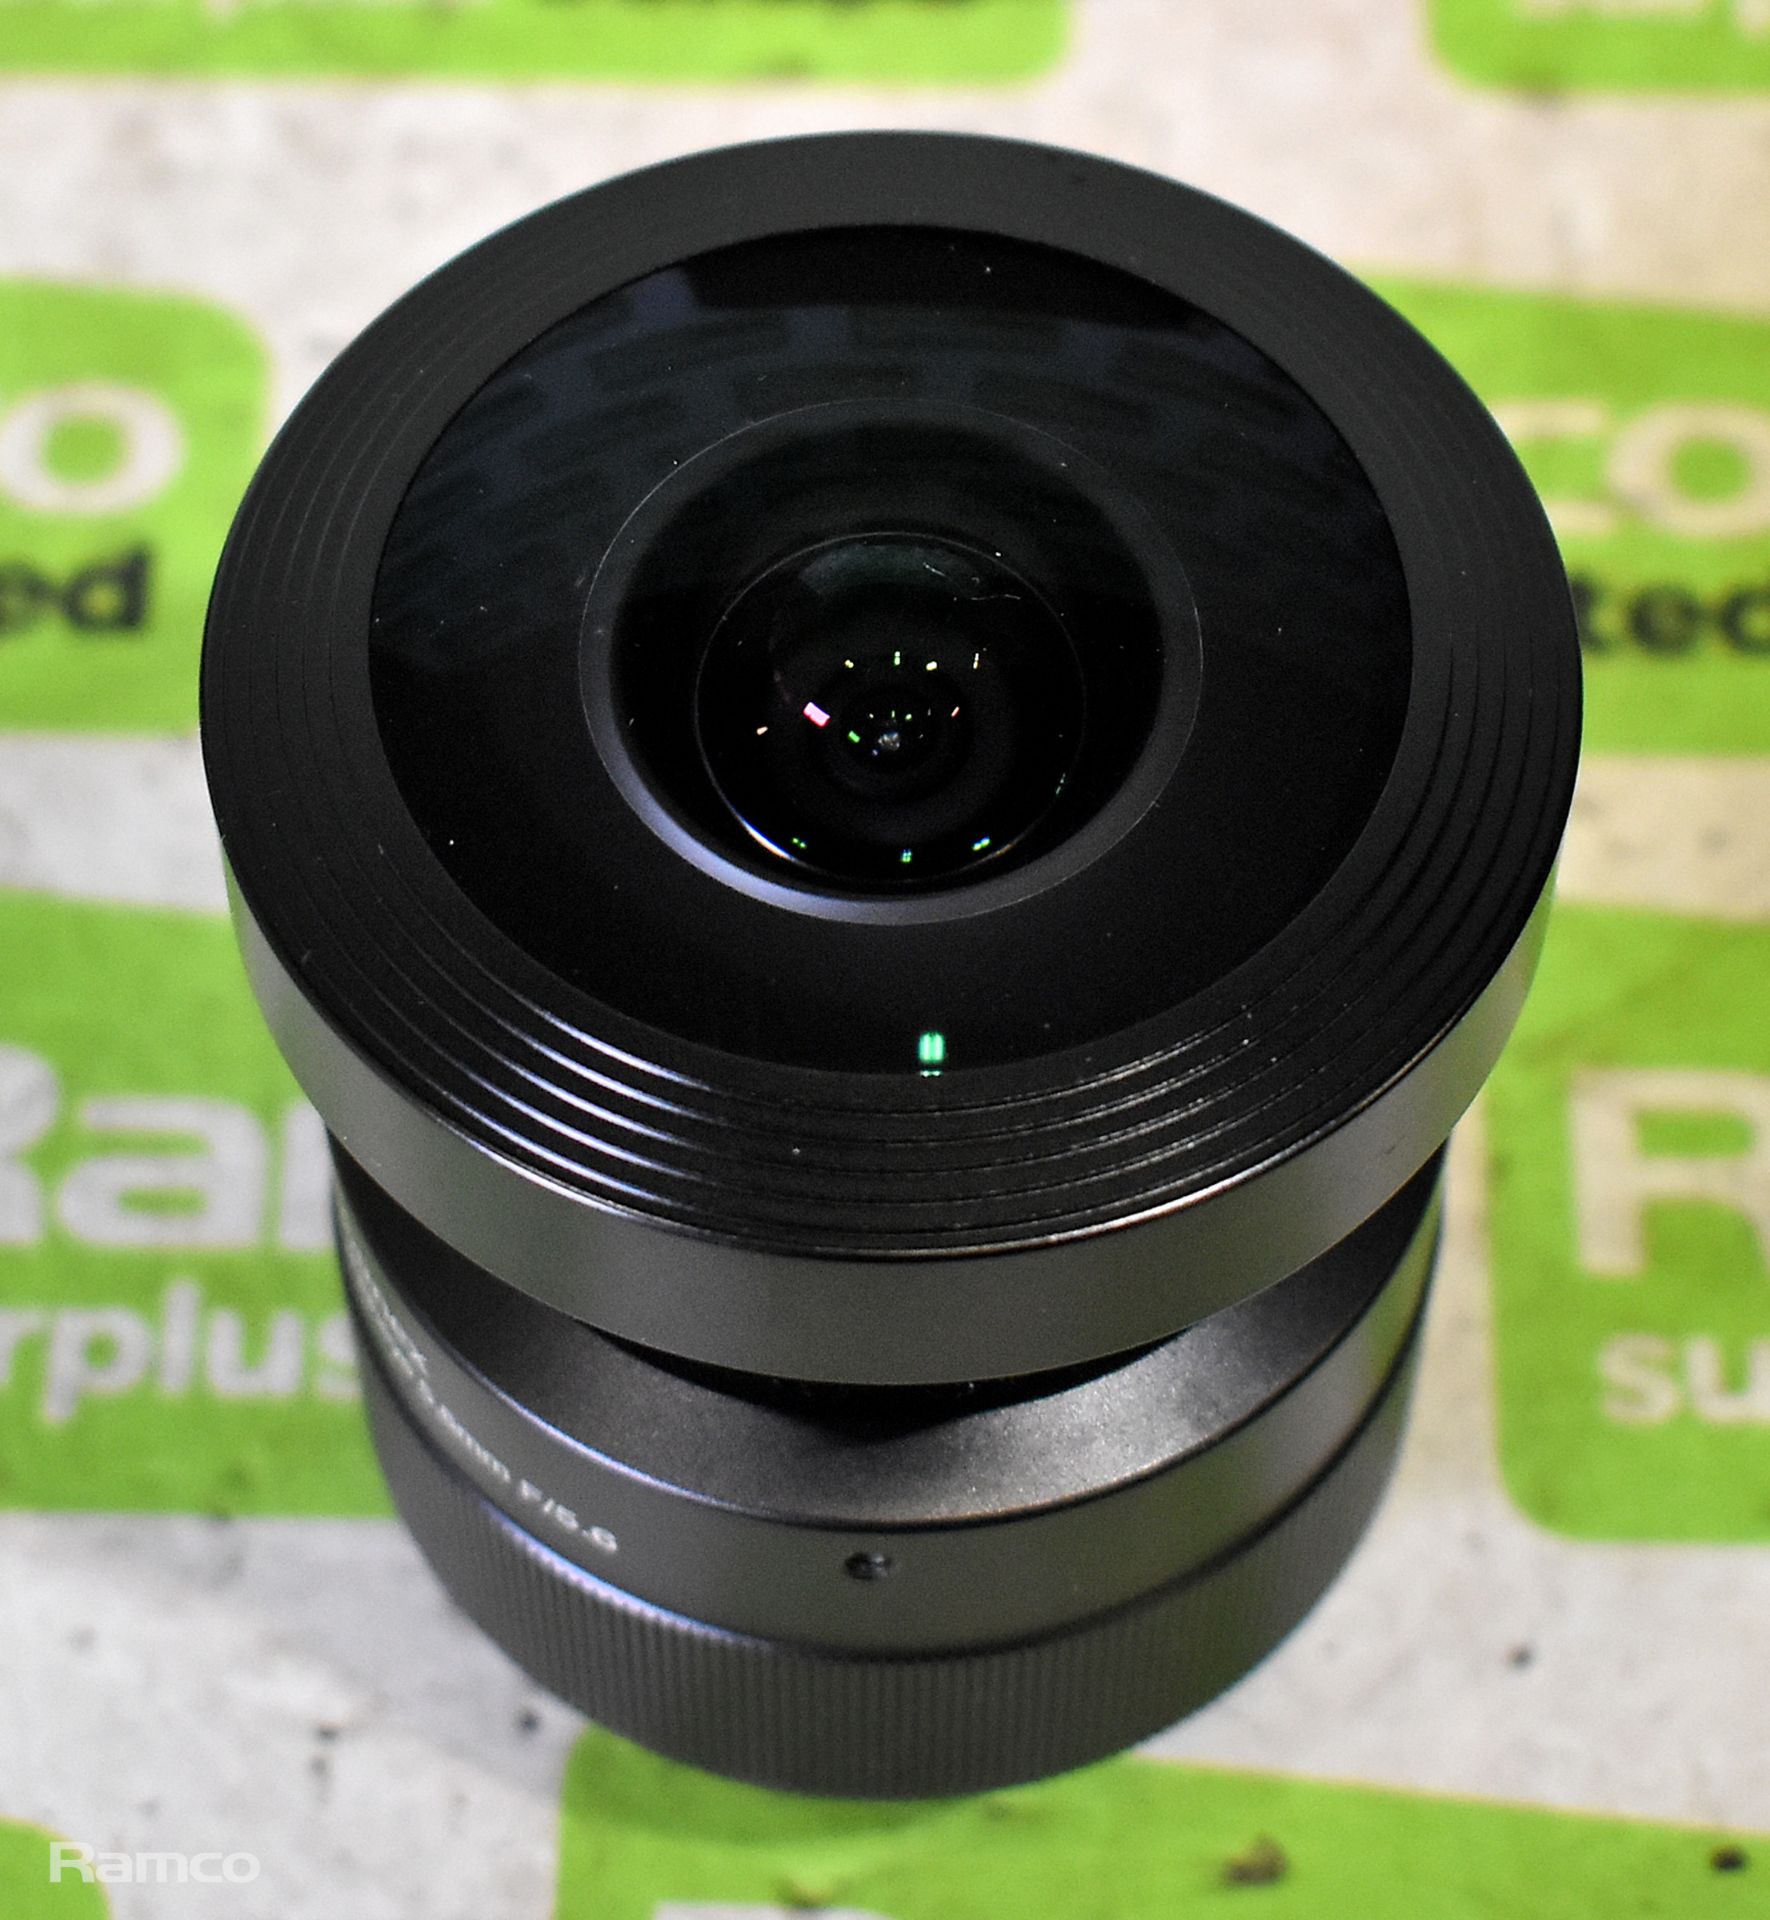 Sunex 5.6mm Superfisheye lens - Image 5 of 5